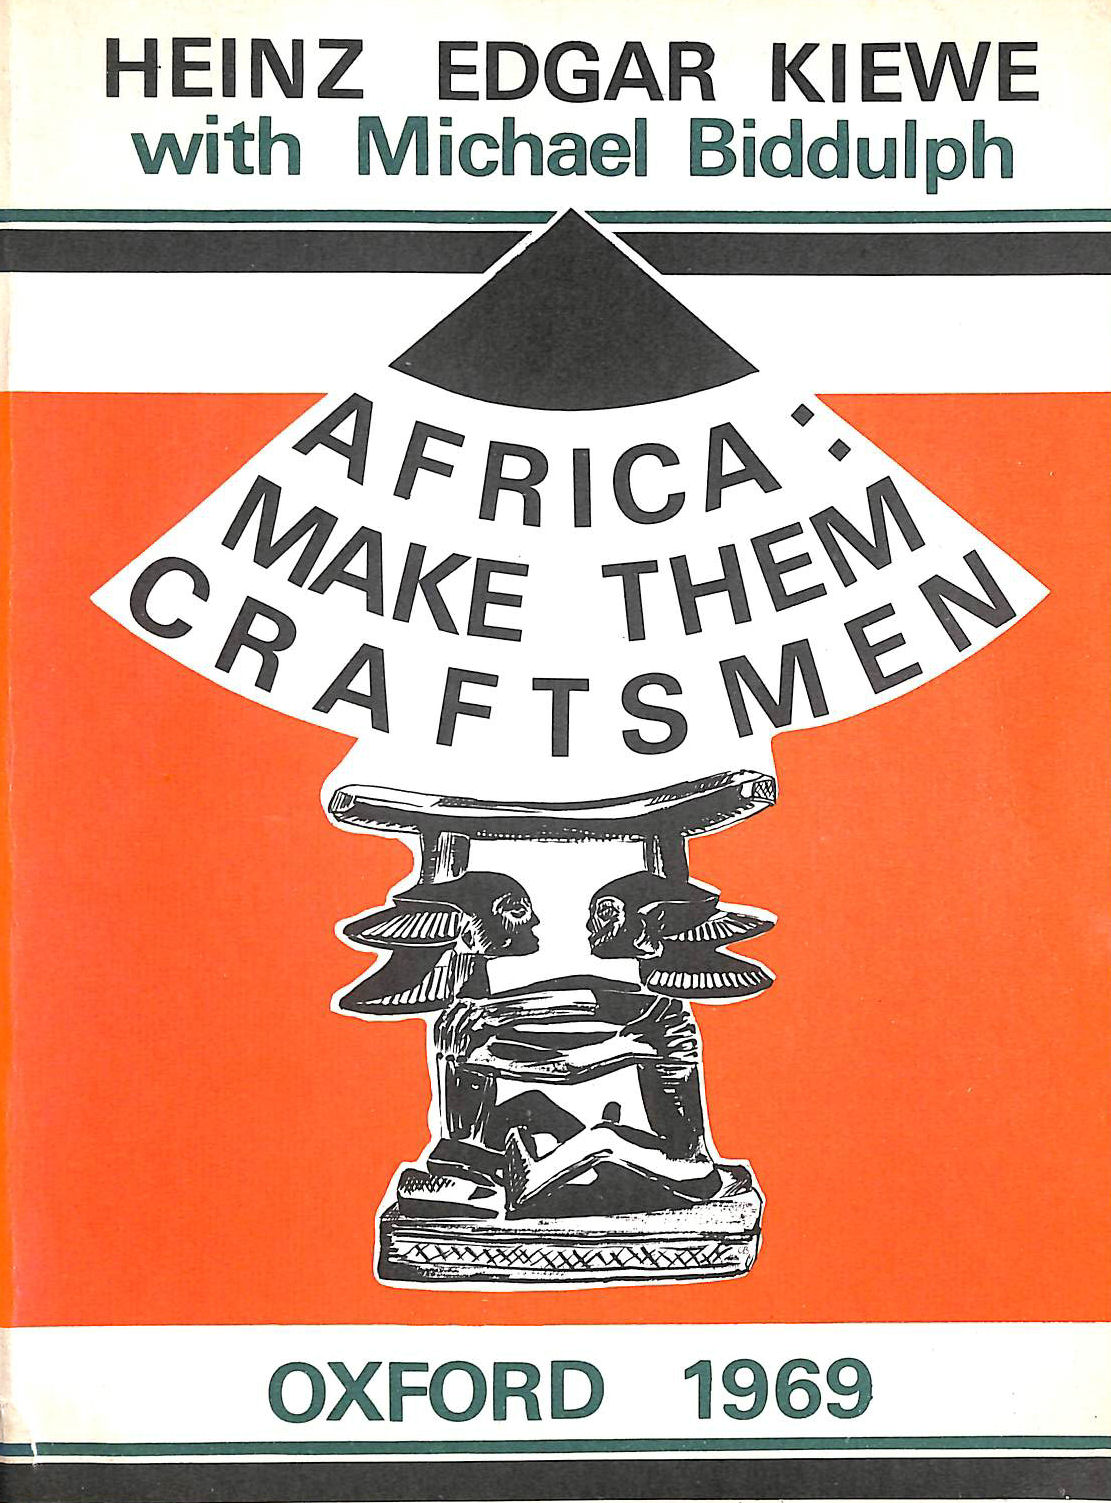 HEINZ EDGAR KIEWE - Africa: Make Them Craftsmen, by Heinz Edgar Kiewe with Michael Biddulph